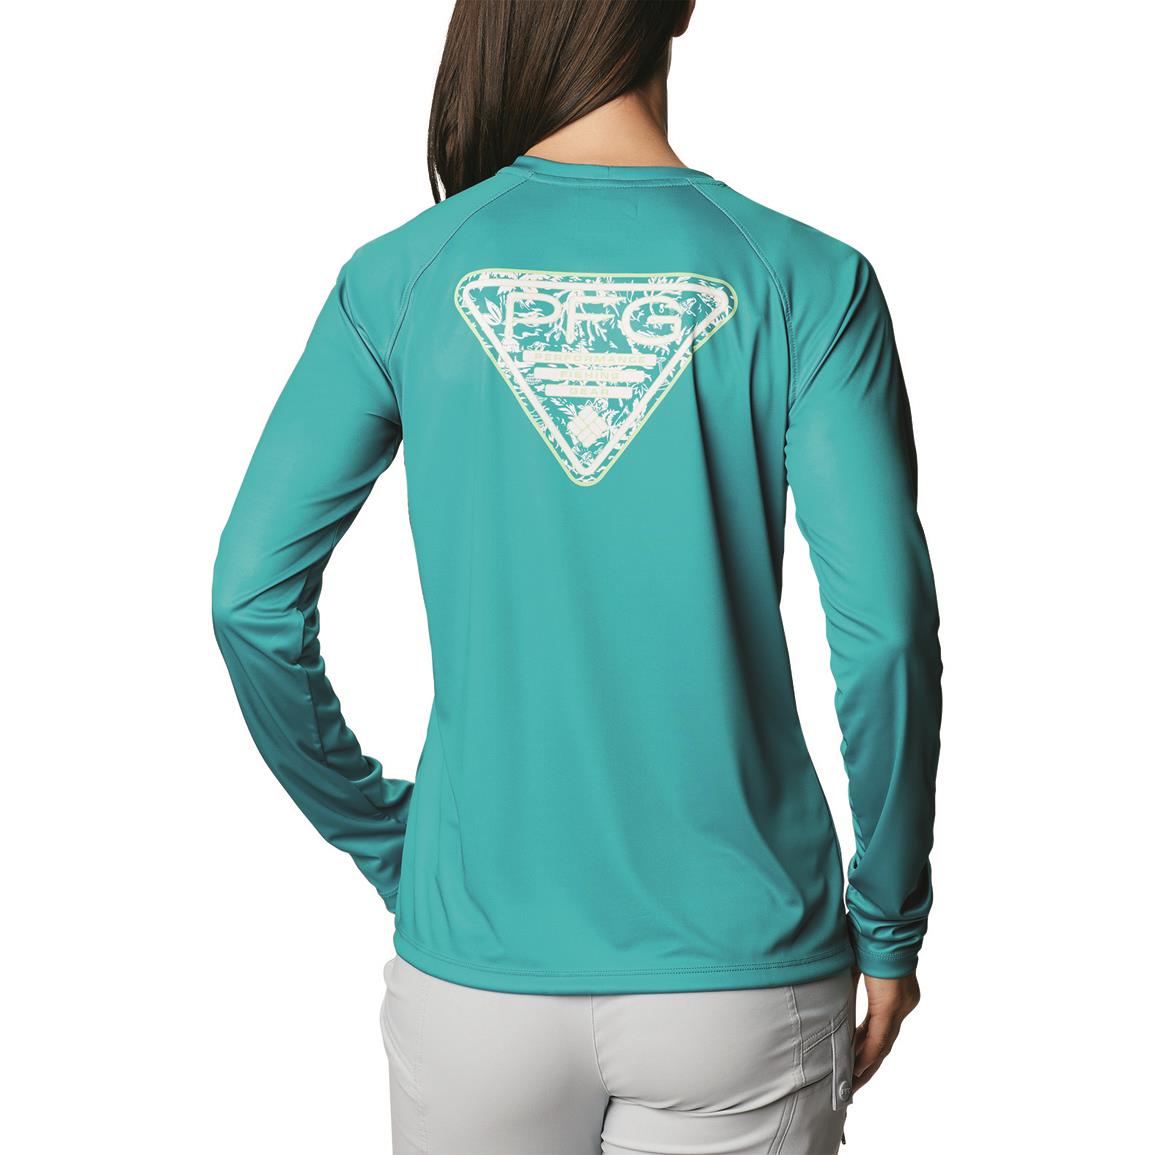 Columbia Women's Tidal Tee PFG Printed Triangle Shirt, Tropic Water